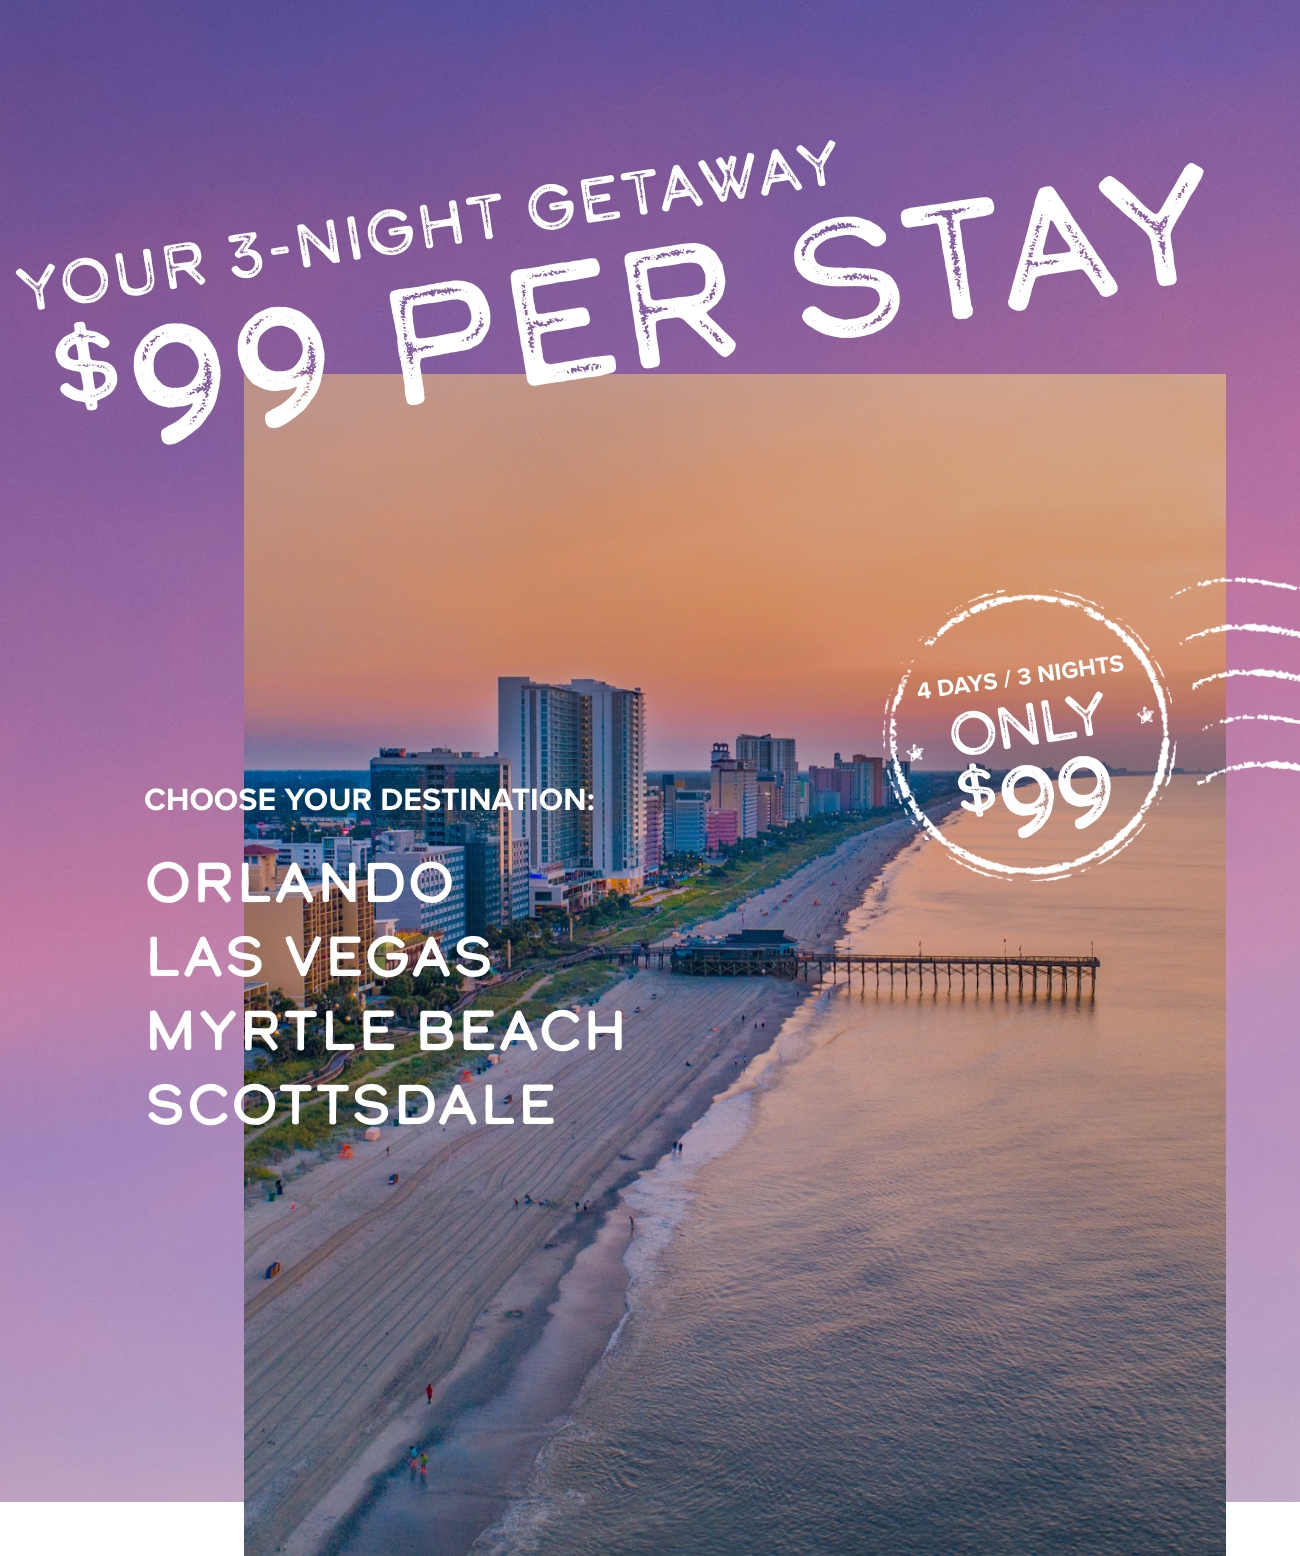 Your 3-Night Getaway $99 Per Stay. Choose Your Destination: Orlando, Las Vegas, Myrtle Beach, Scottsdale Frr e L e S - v,, S CHOOSE YOUR DESTINATION: $99 s ORLANDO -t NSRS 783 MYRTLE BEACH SCOTTSDALE 